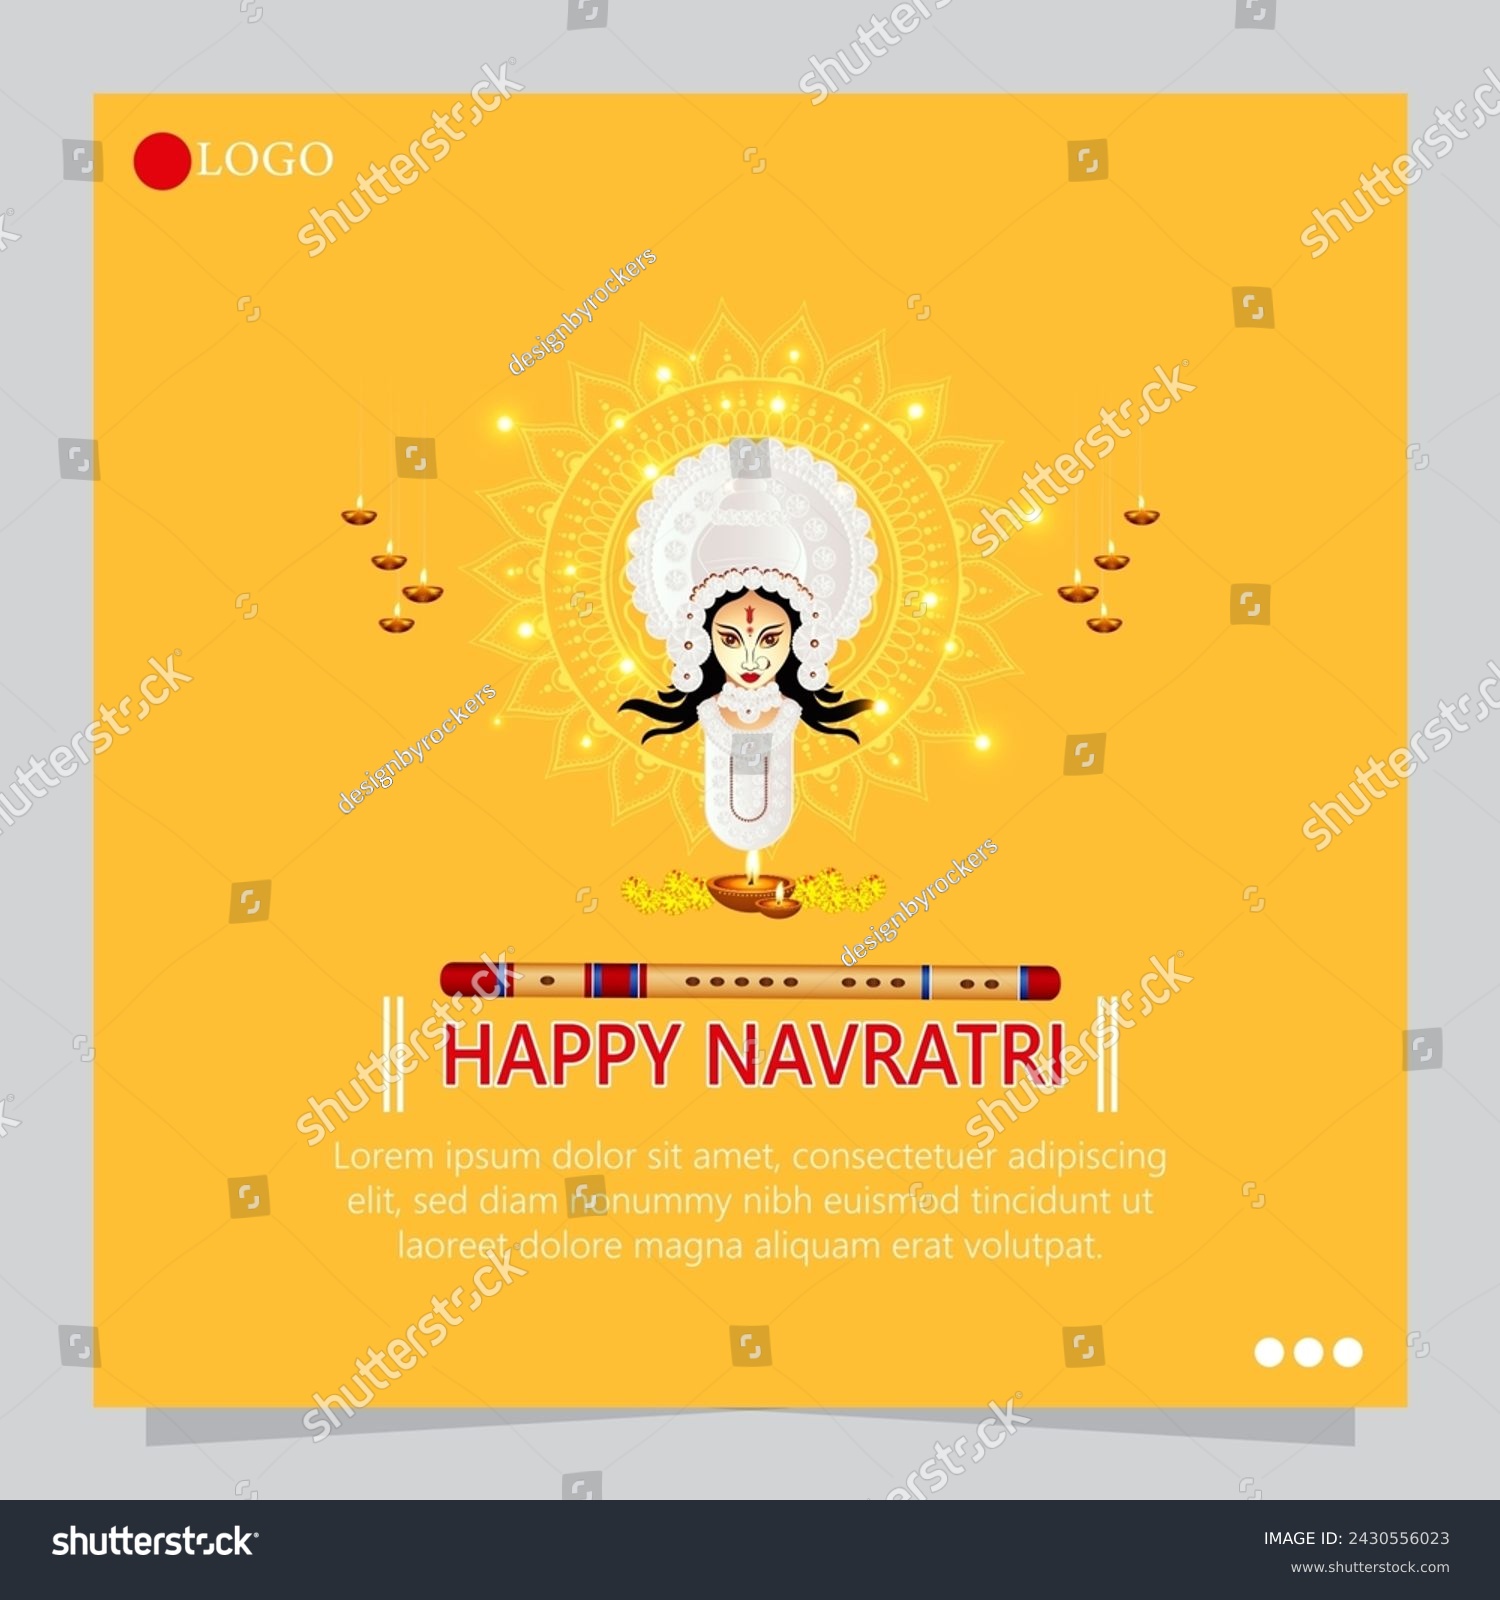 SVG of Navratri is a Hindu festival celebrated over nine nights, dedicated to the goddess Durga. svg